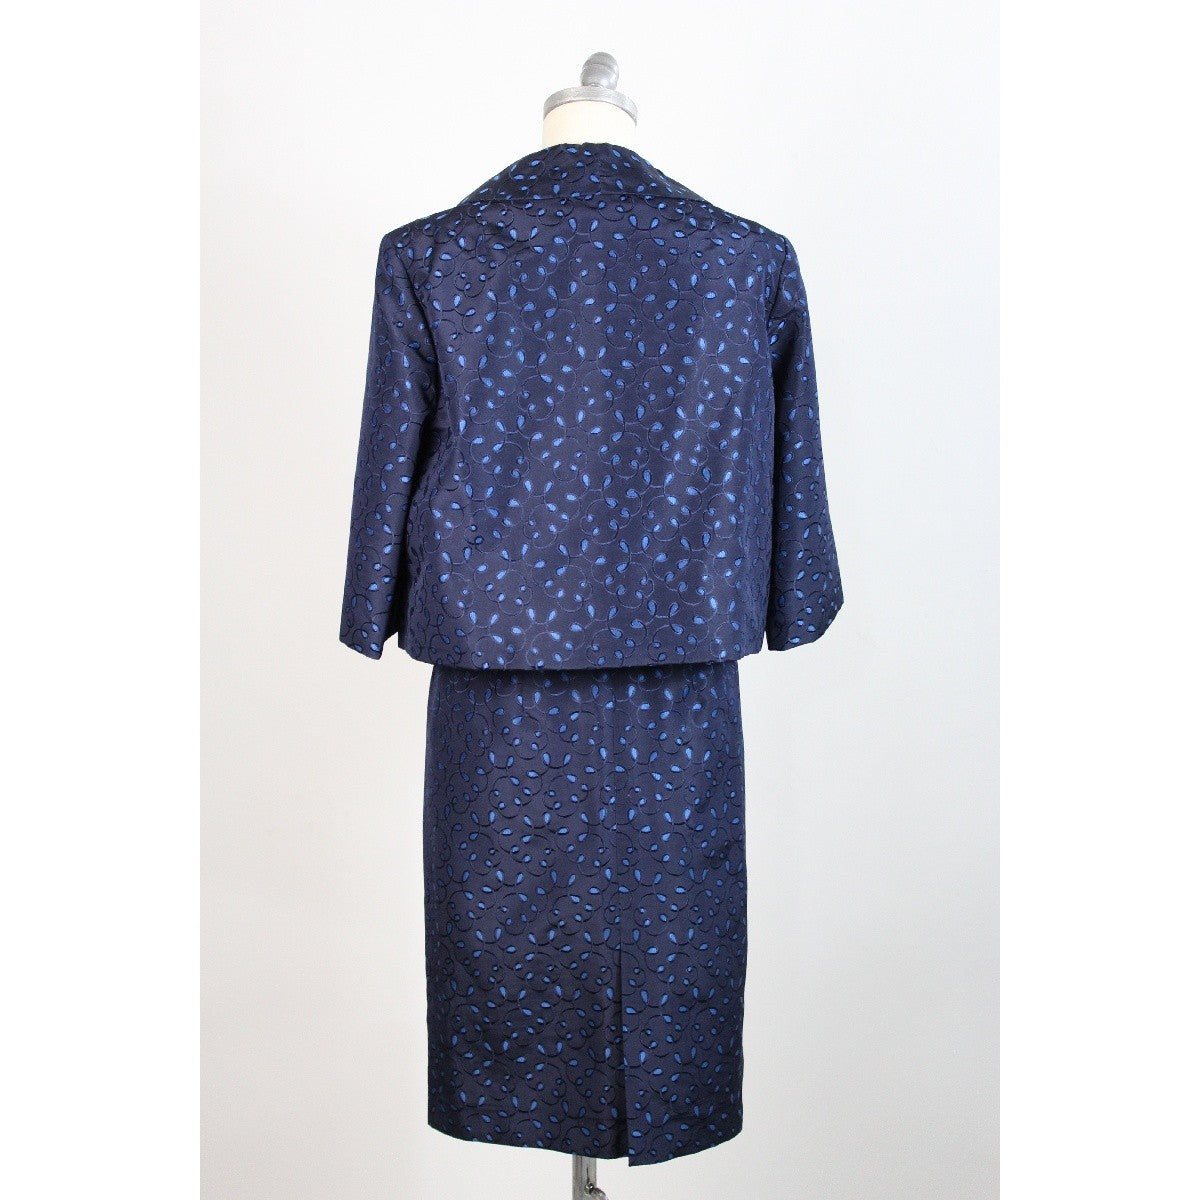 Arte Fiorentina Blue Vintage Floral Suit Skirt